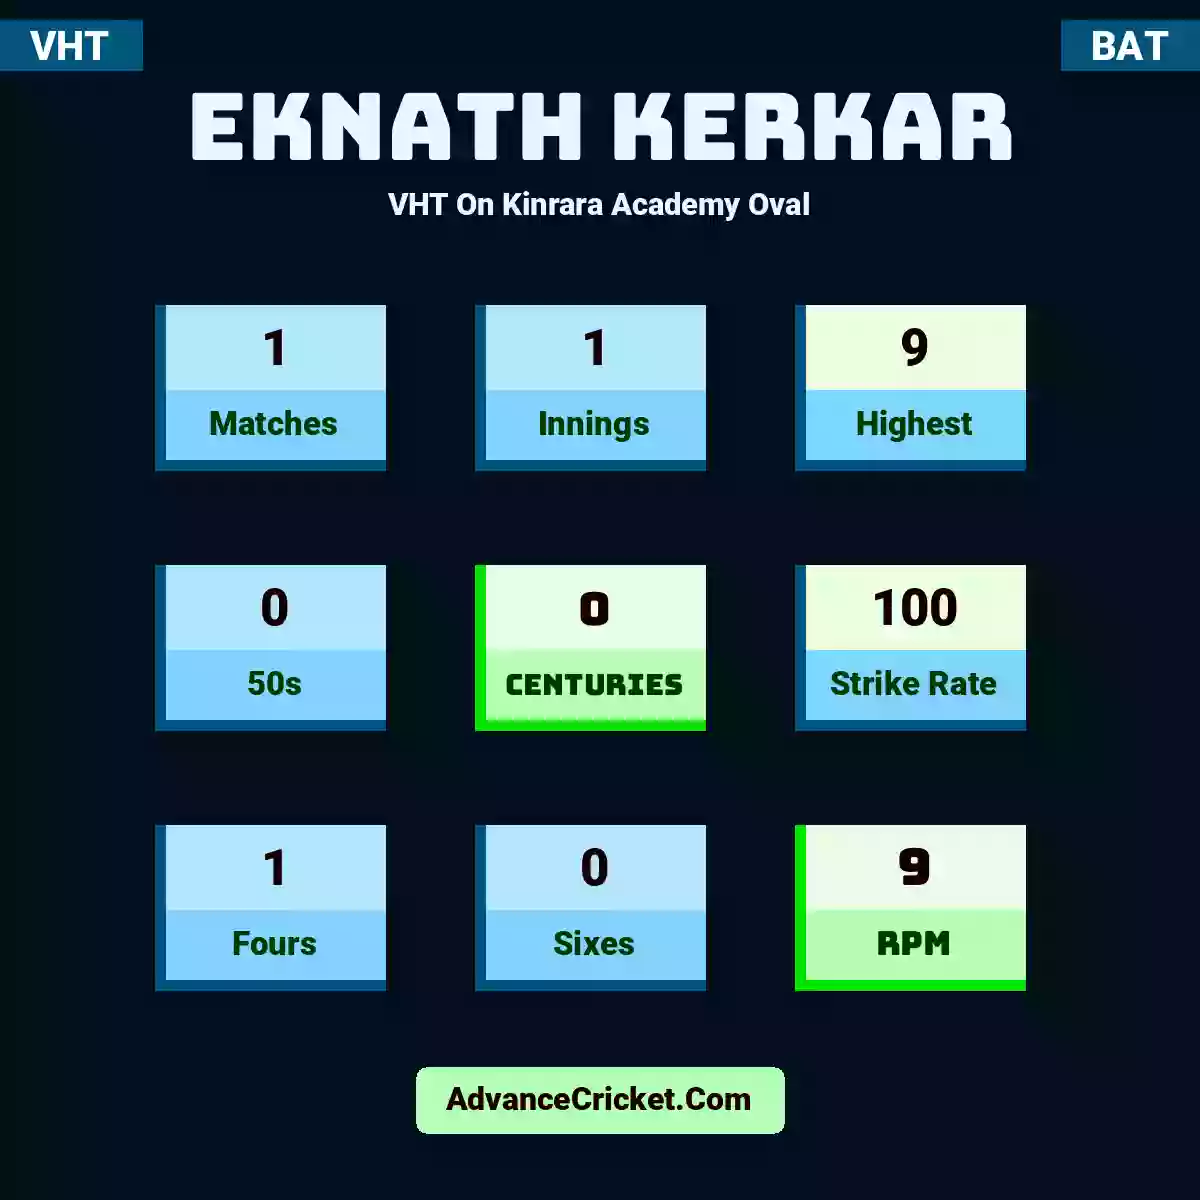 Eknath Kerkar VHT  On Kinrara Academy Oval, Eknath Kerkar played 1 matches, scored 9 runs as highest, 0 half-centuries, and 0 centuries, with a strike rate of 100. E.Kerkar hit 1 fours and 0 sixes, with an RPM of 9.